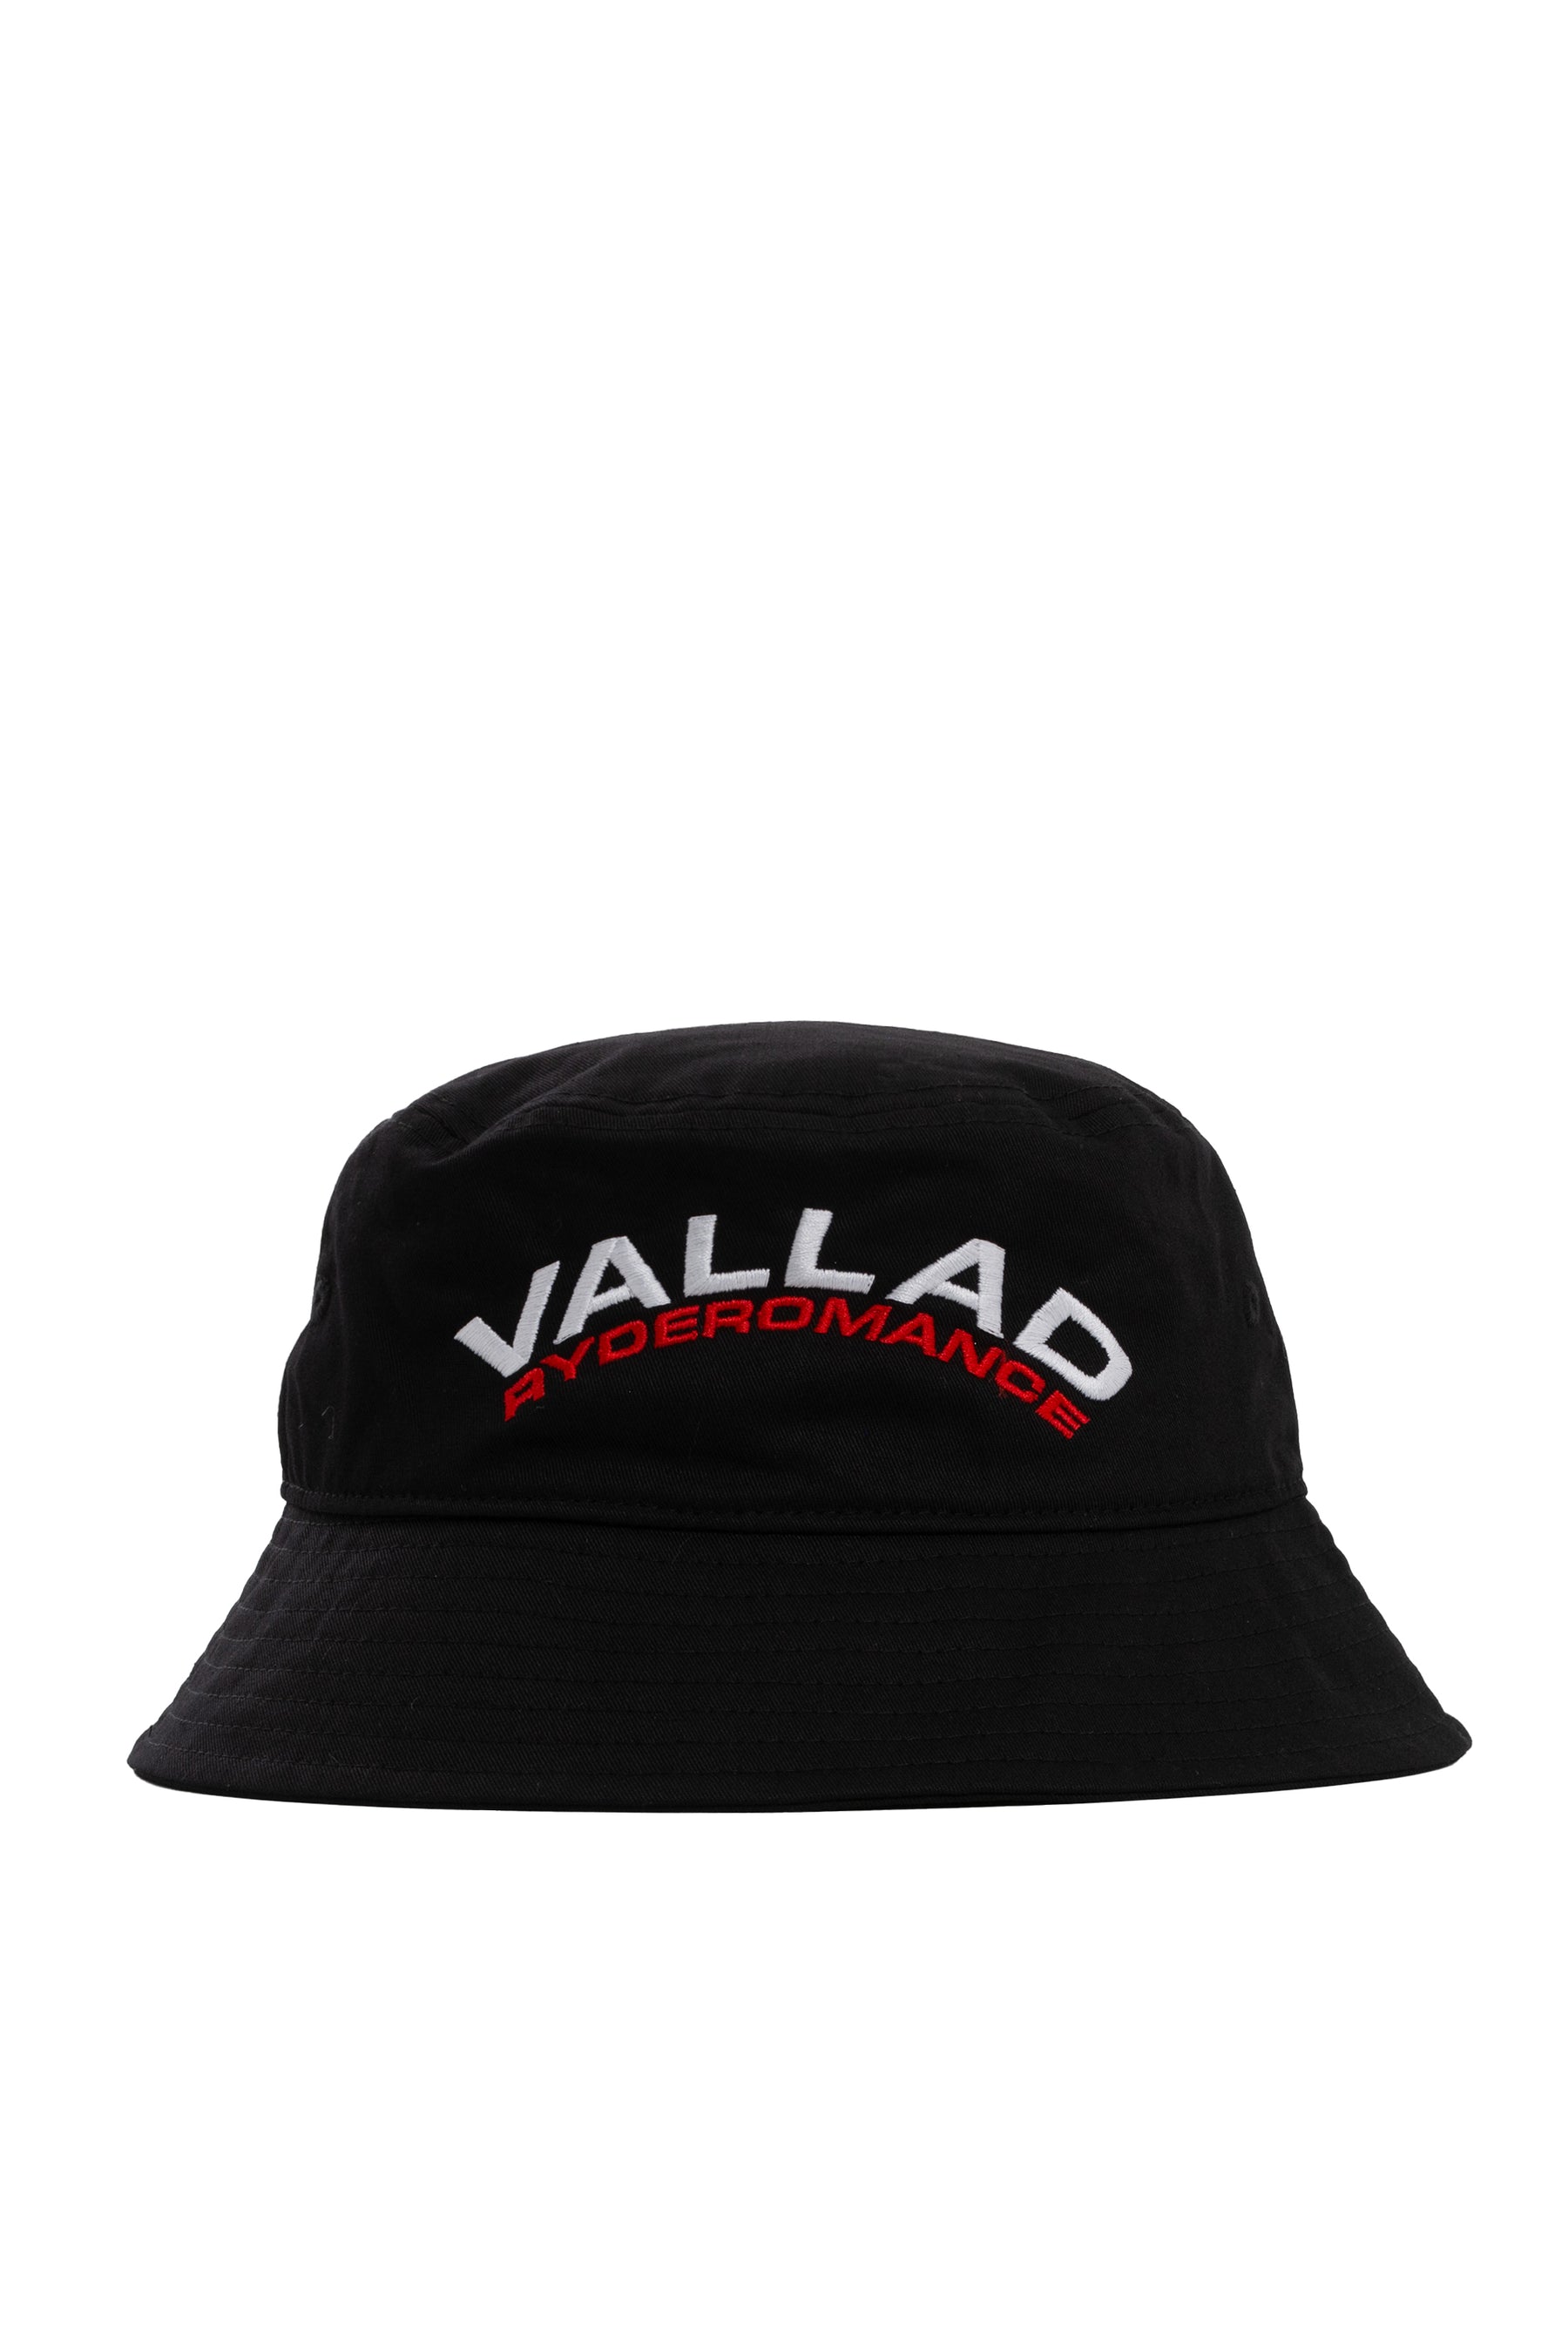 VALLAD バラッド FW23 VALLADXSTUDIO 33 BUCKET HAT / BLK -NUBIAN